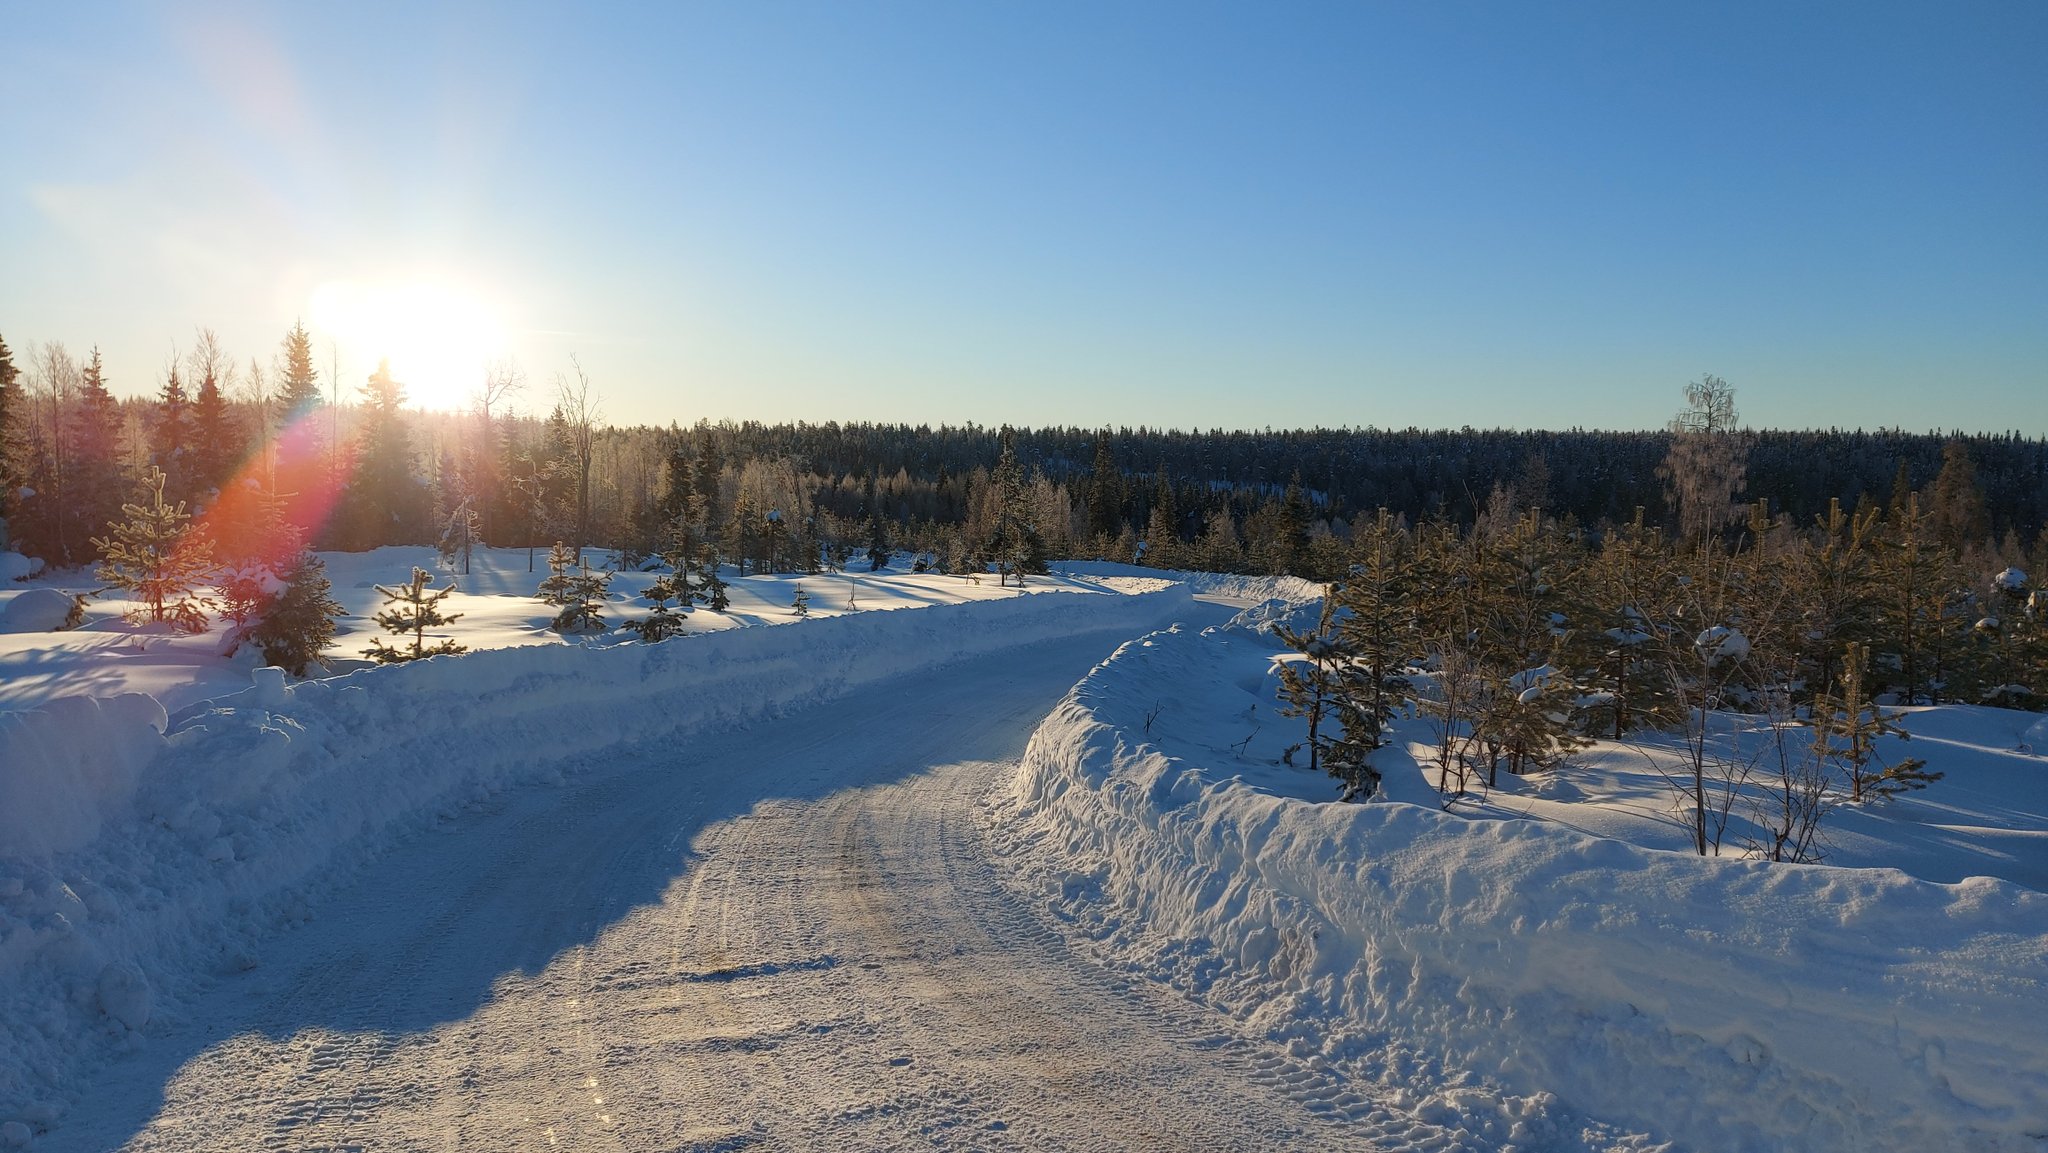 wrc - WRC: Arctic Rally Finland - Powered by CapitalBox [26-28 Febrero] - Página 7 EvS93PmXEAMvq_P?format=jpg&name=large